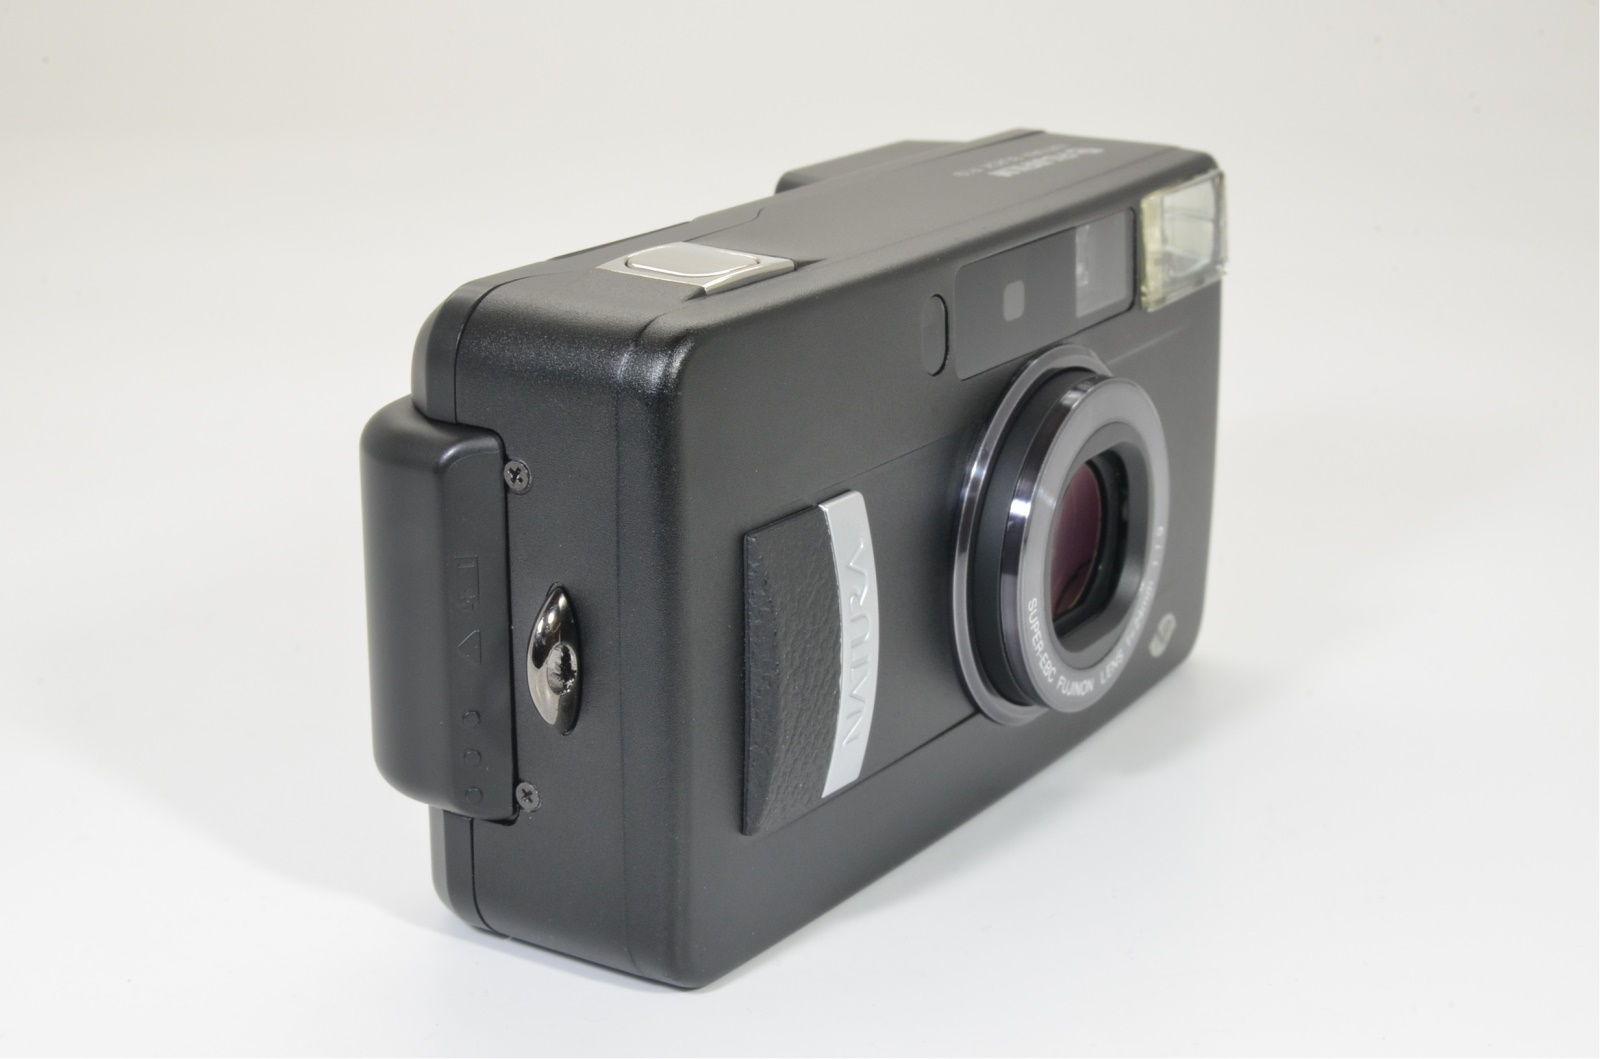 fujifilm natura black 35mm film camera fujinon 24mm f1.9 shooting tested